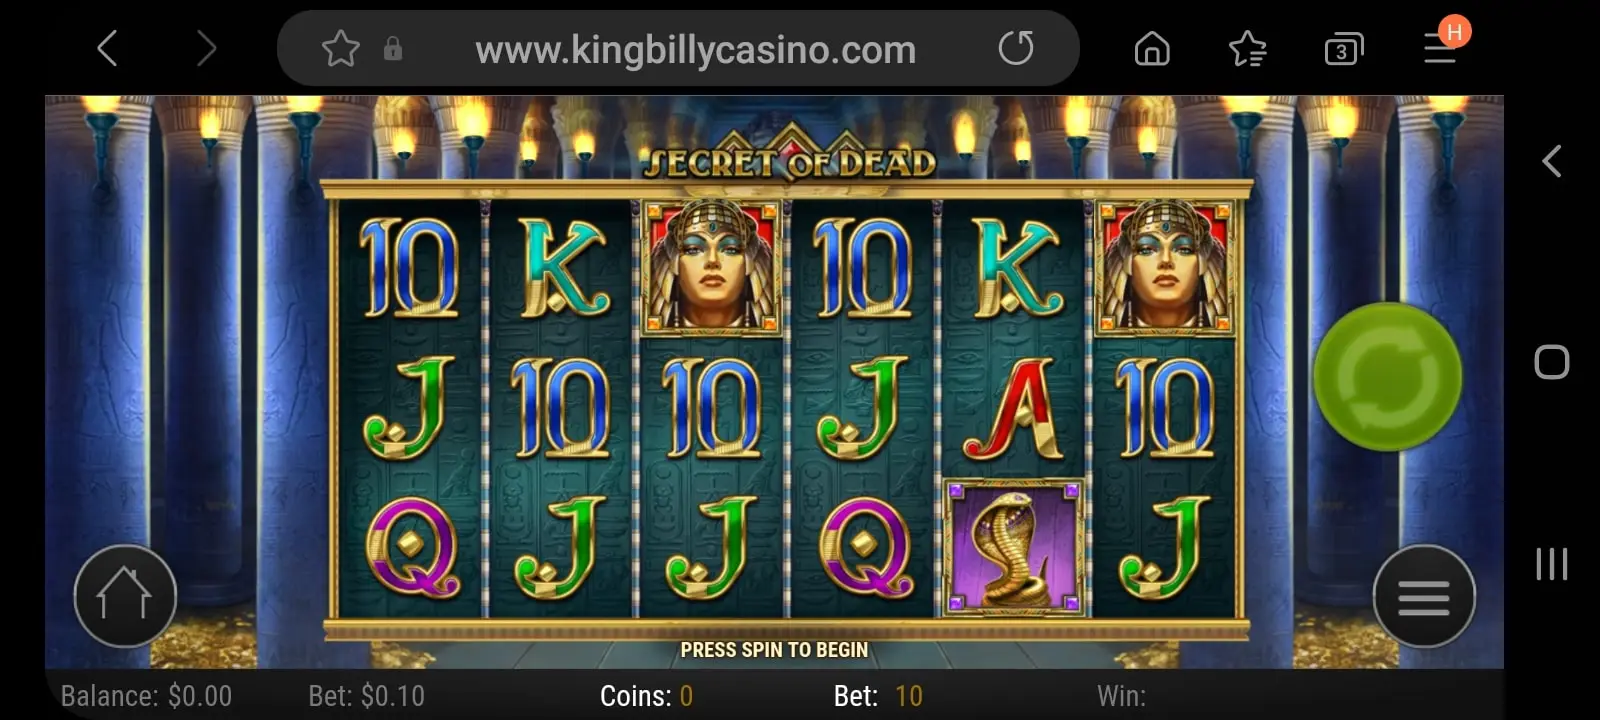 king billy casino app screenshot 2